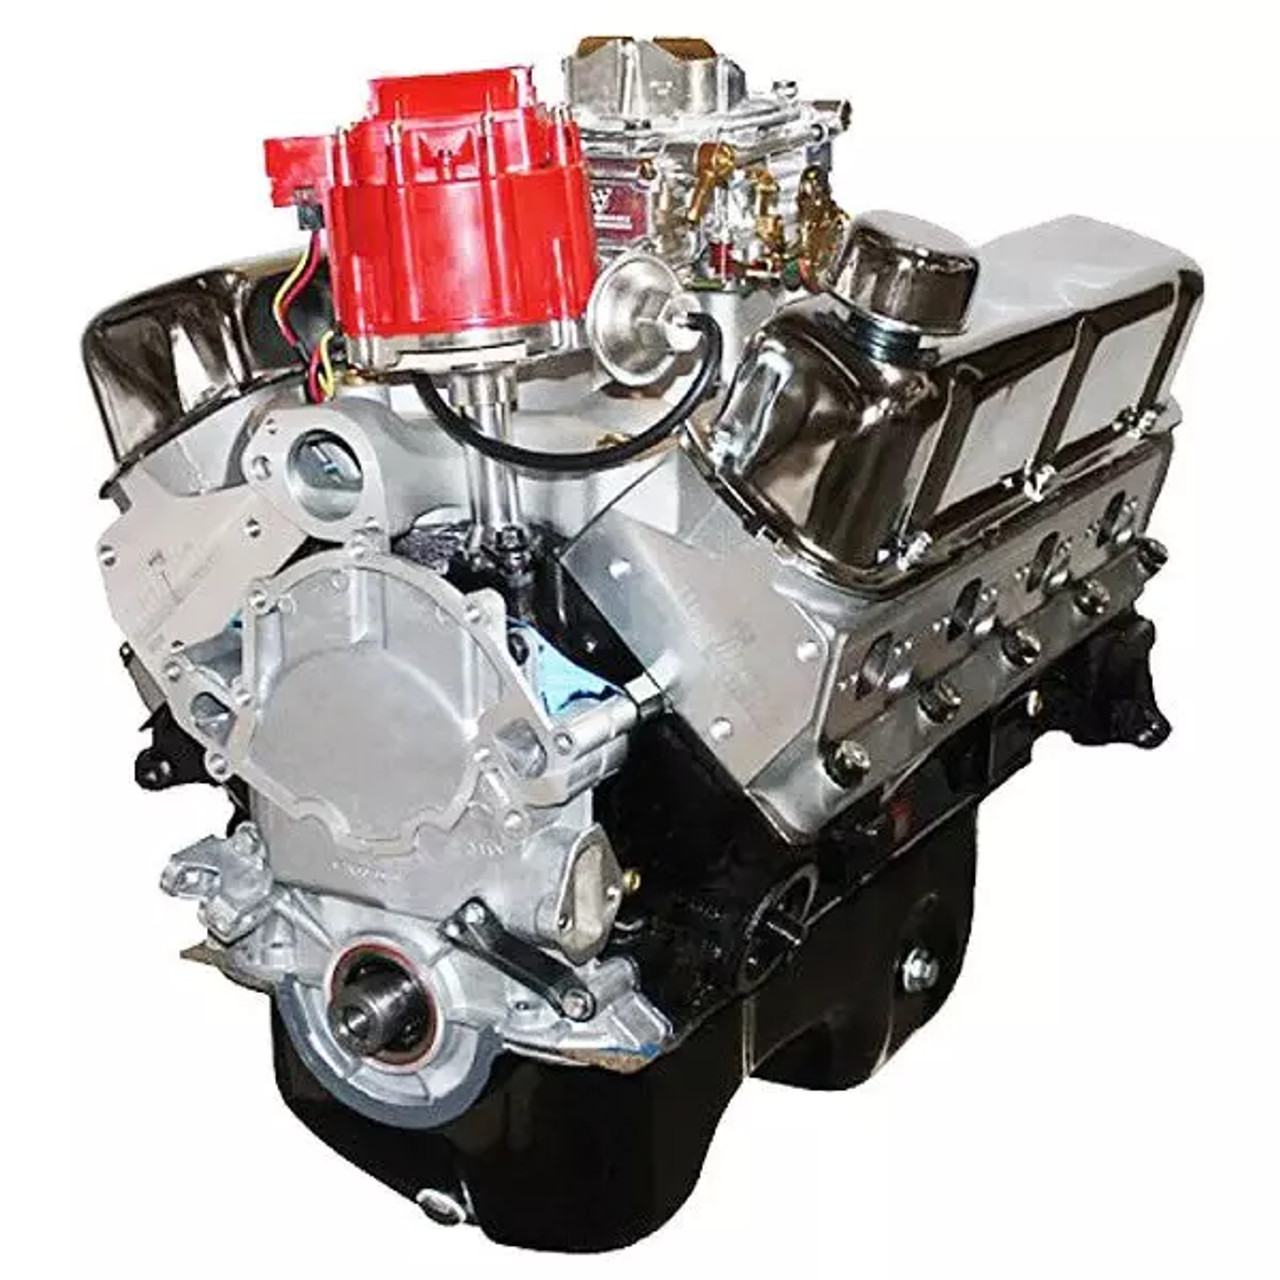 SBF 302 Crate Engine 361 HP - 334 Lbs Torque